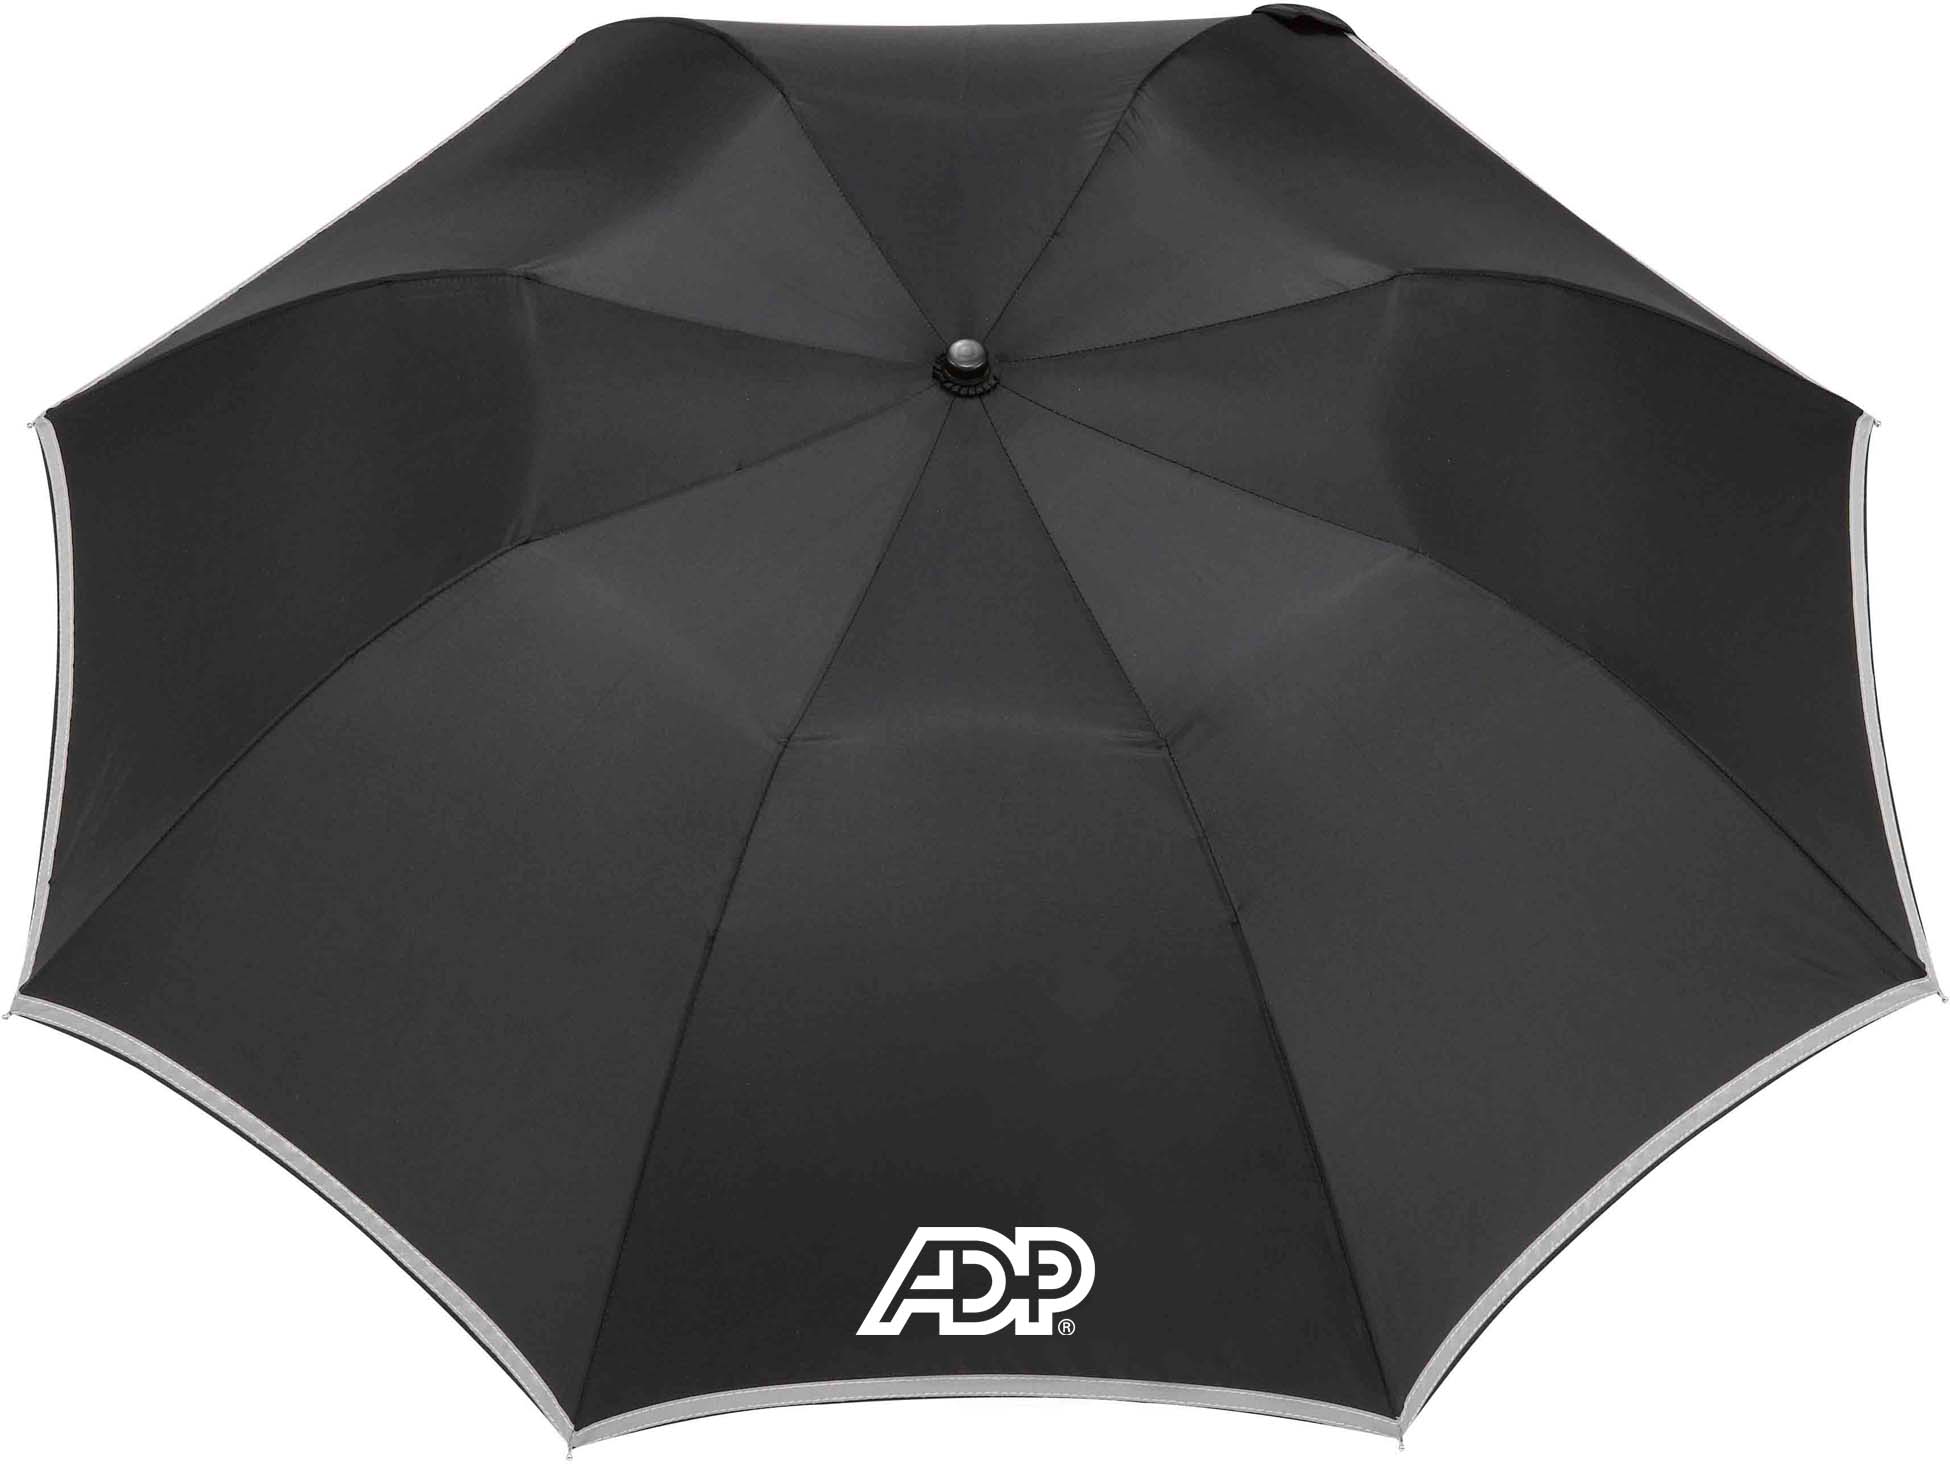 42" Auto Folding Safety Umbrella